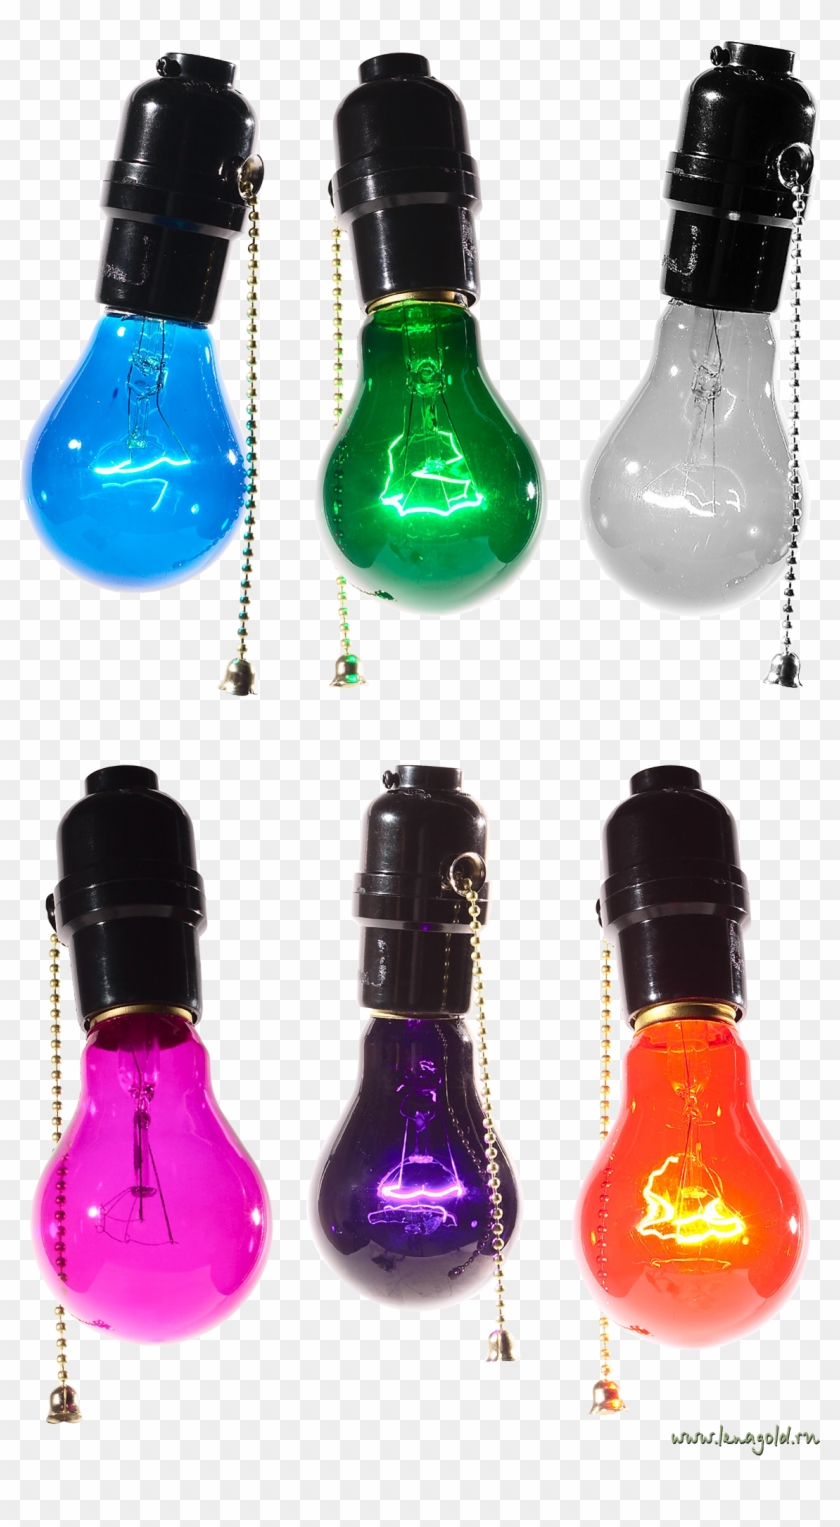 Incandescent Light Bulb Glass Clip Art - Incandescent Light Bulb Glass Clip Art #767092